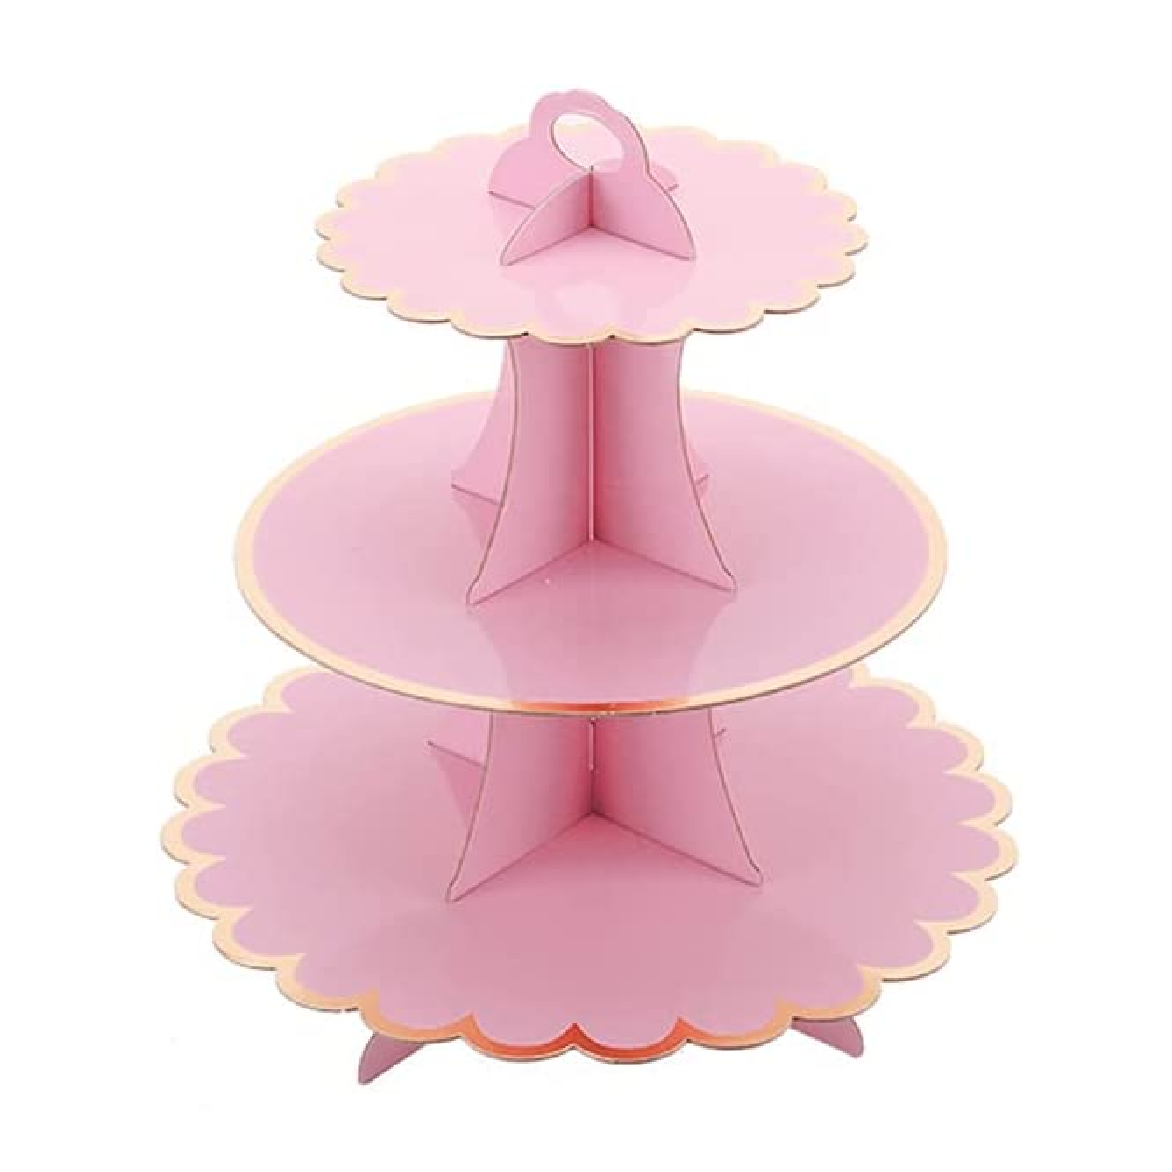 Cupcake Stand/Tower - 3 Tier Cupcake Display - Pink